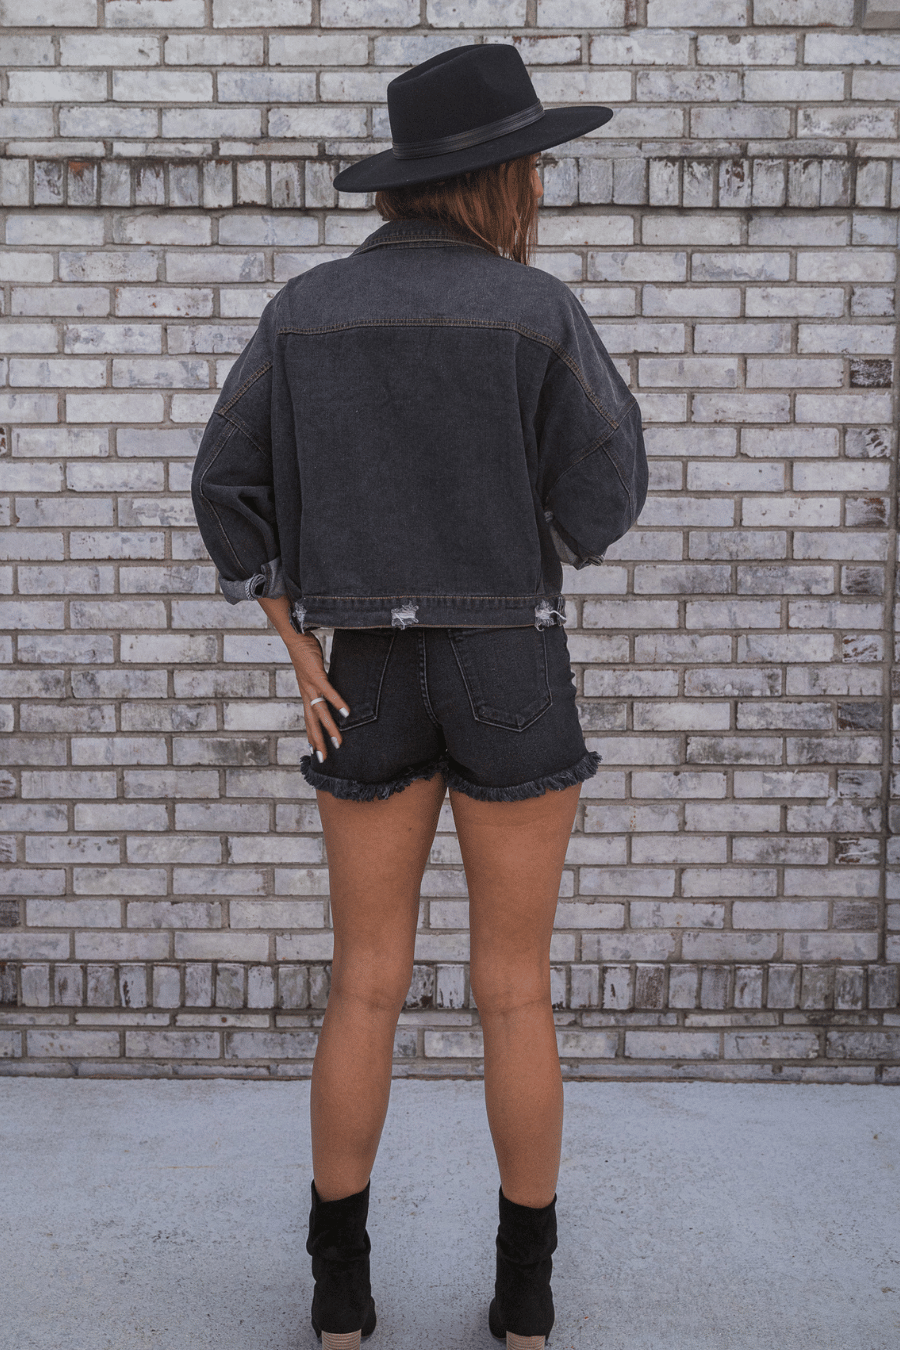 back of black denim shorts against a white brick background